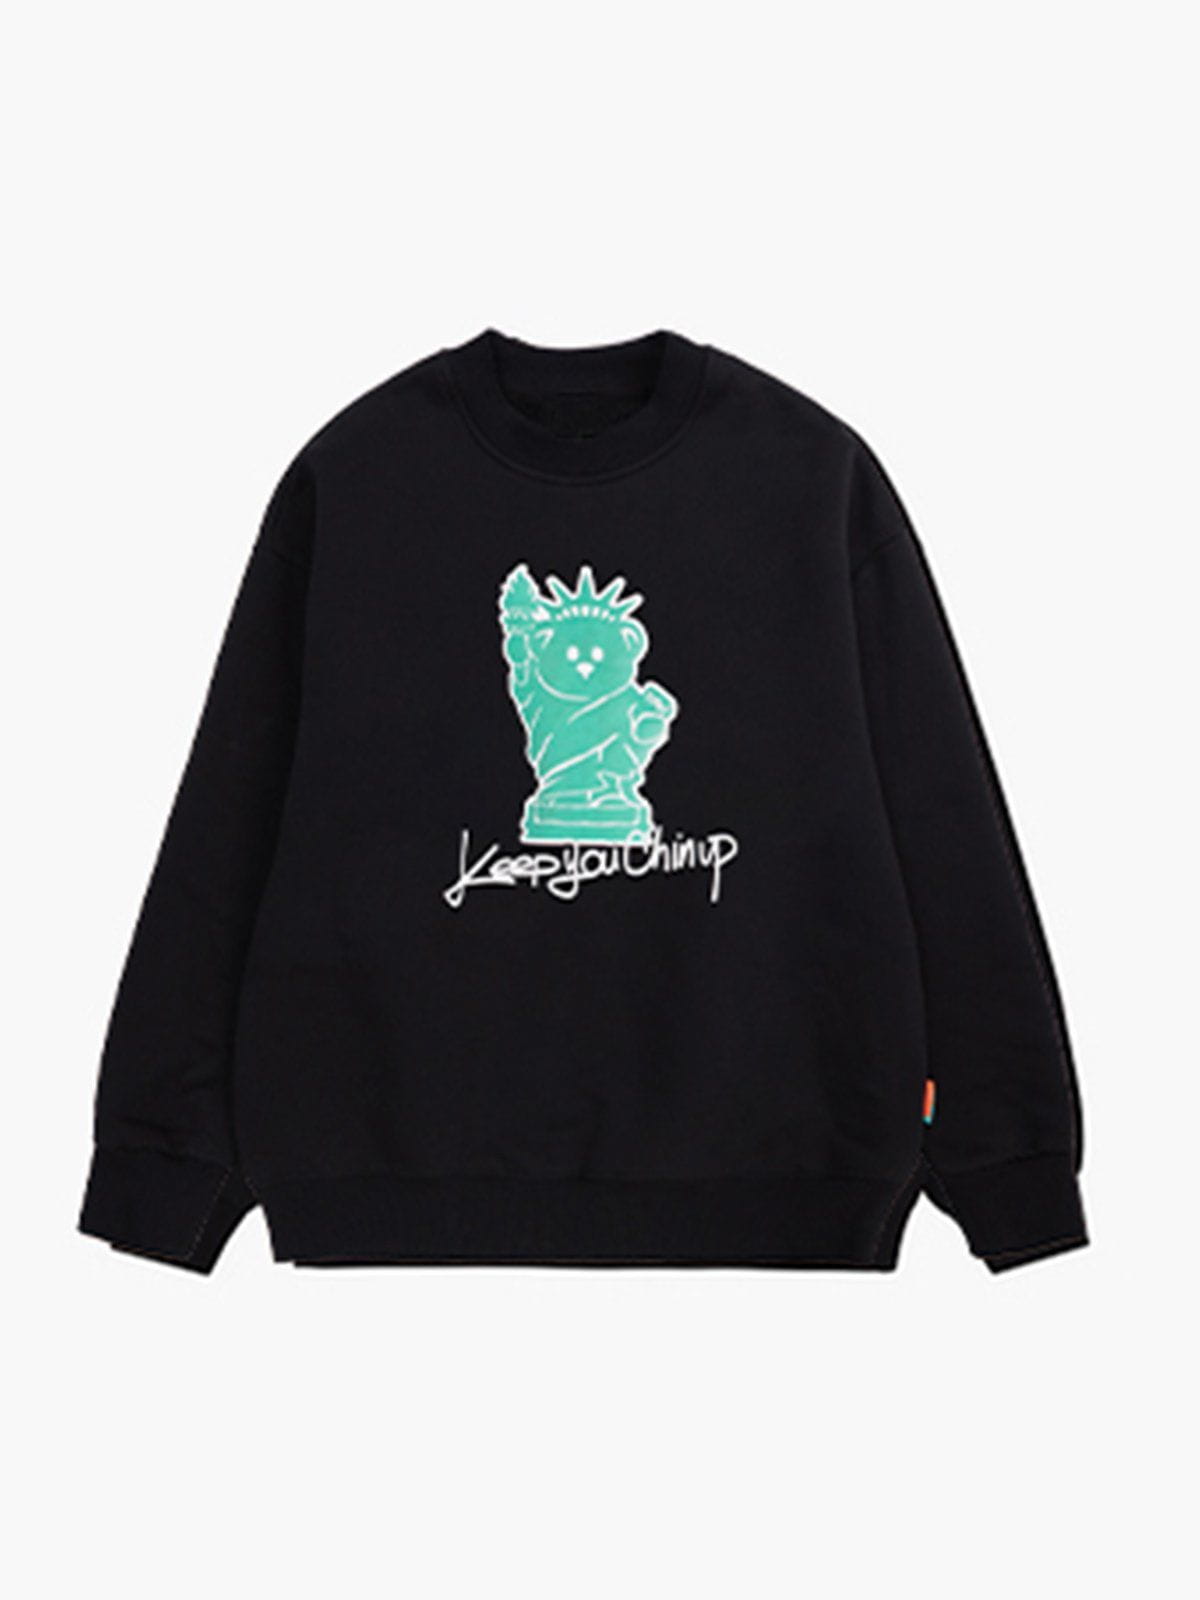 LUXENFY™ - Temperature Change Bear Print Sweatshirt luxenfy.com